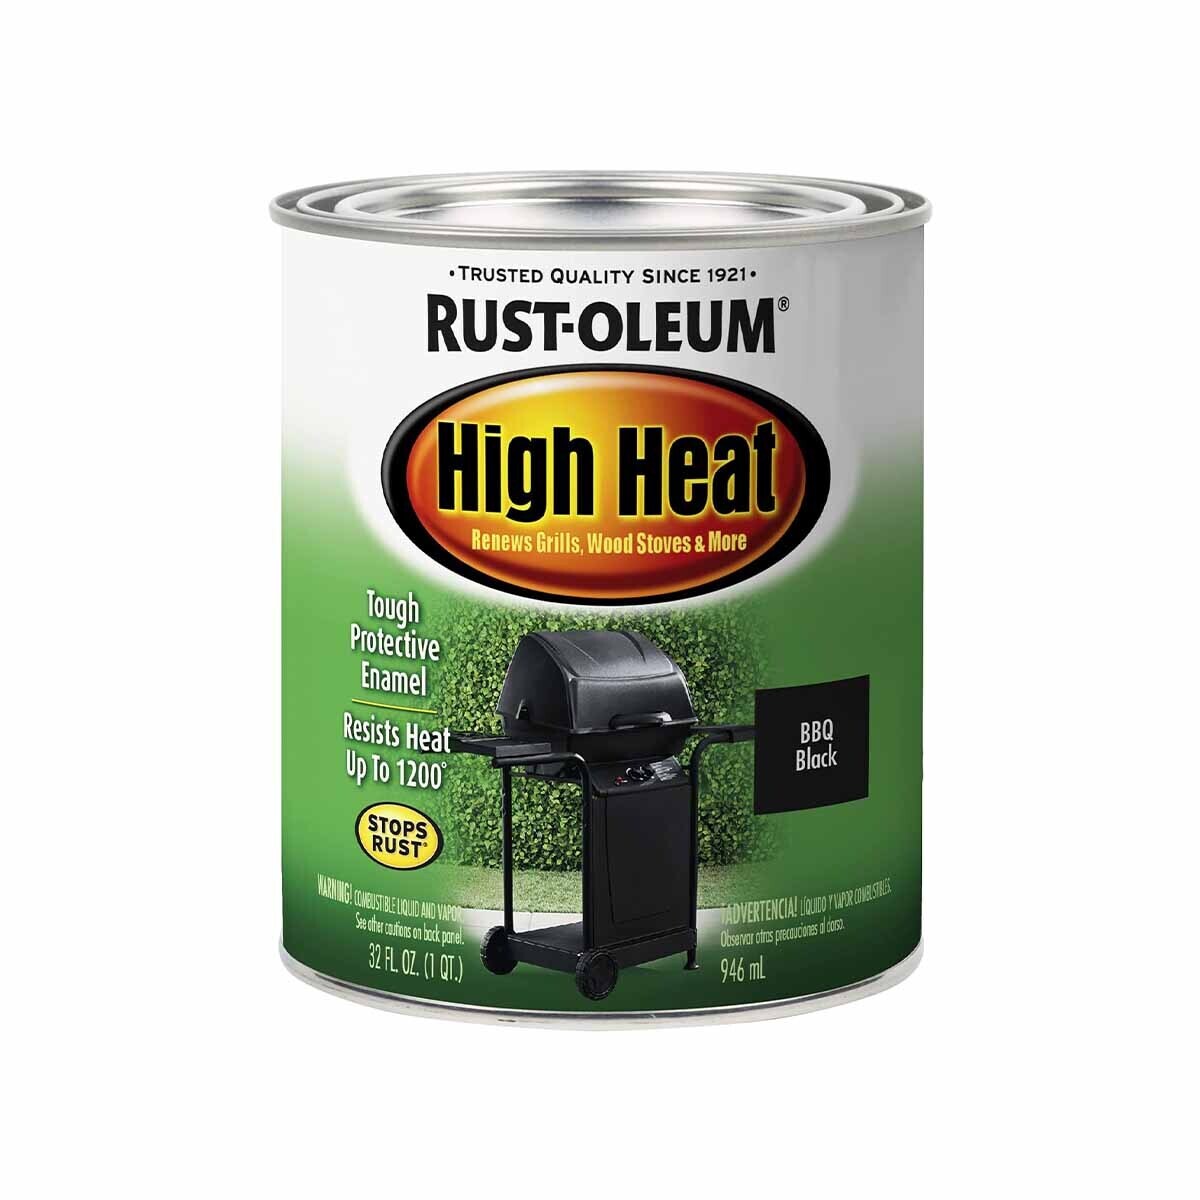 Rust-Oleum High Heat Brush Paint